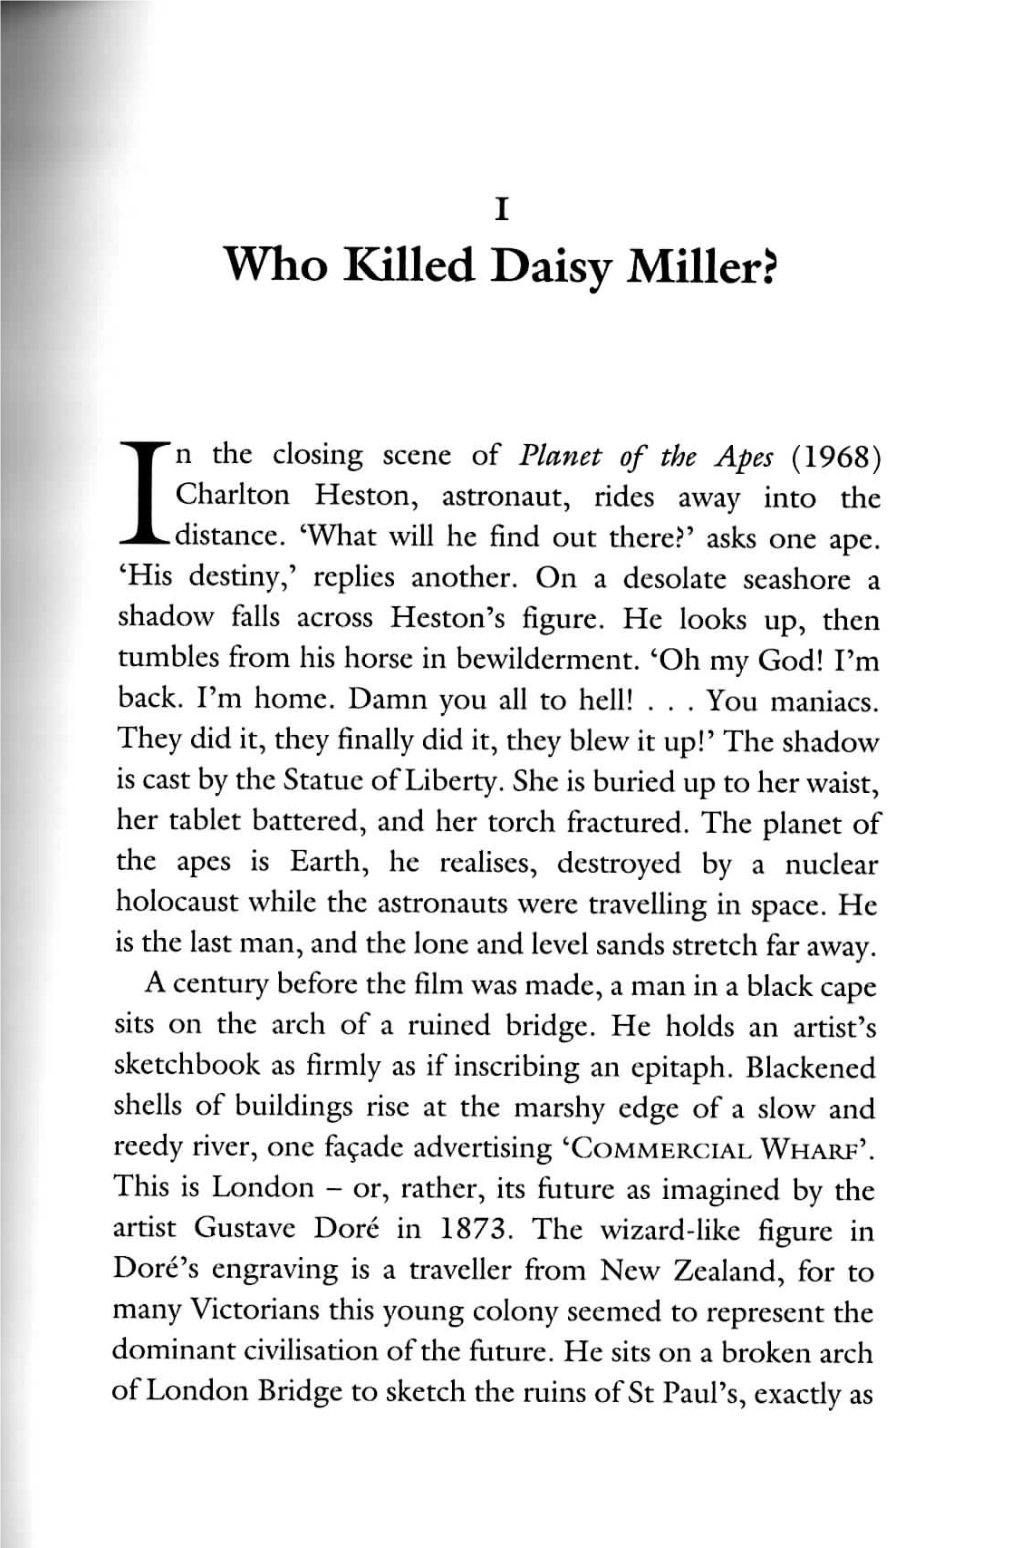 Who Killed Daisy Miller?